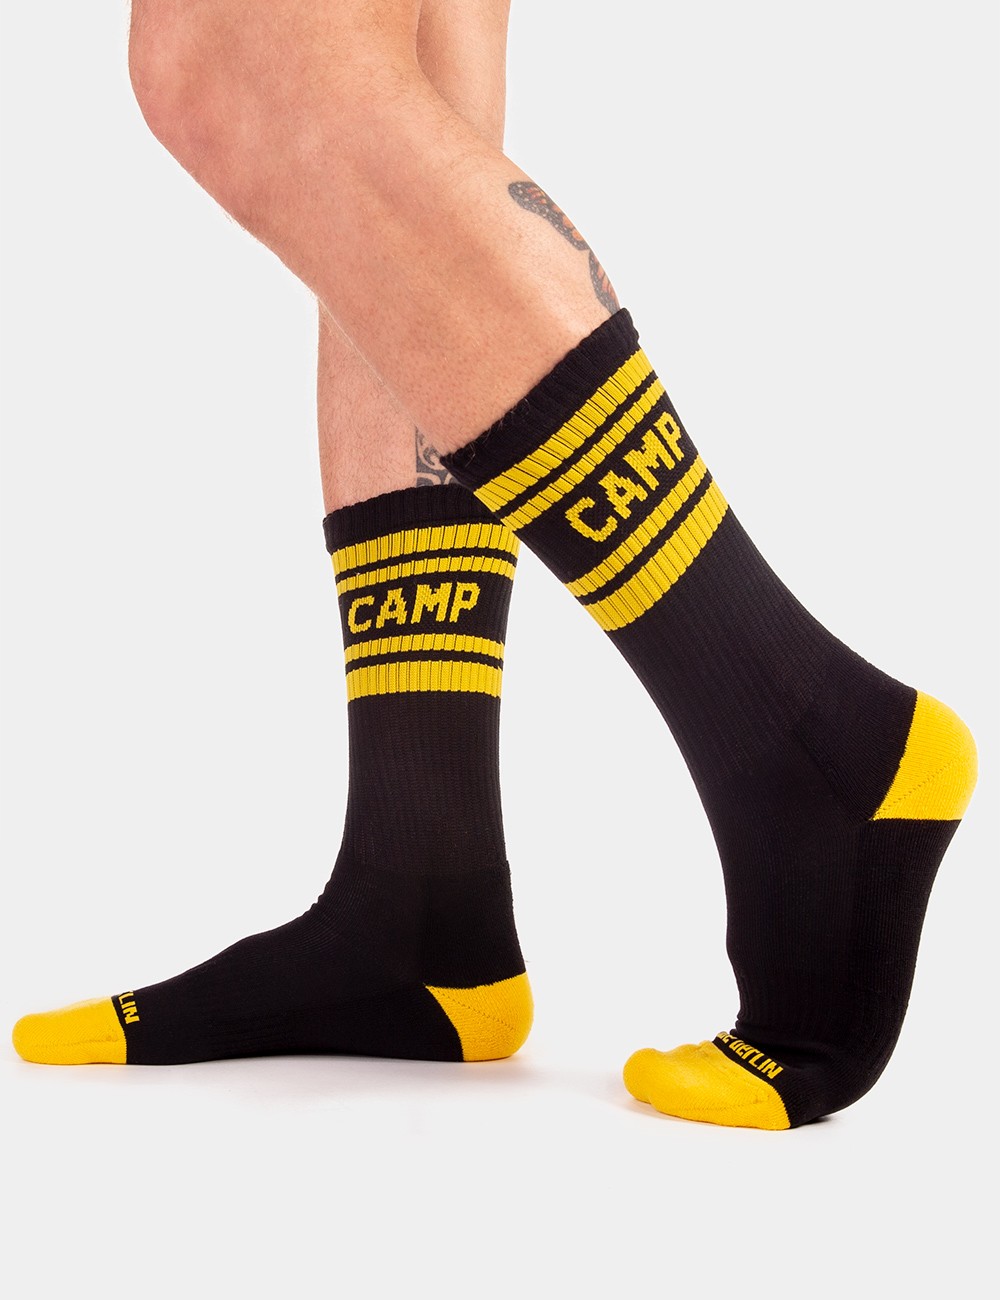 Camp Socks  - Black-Yellow